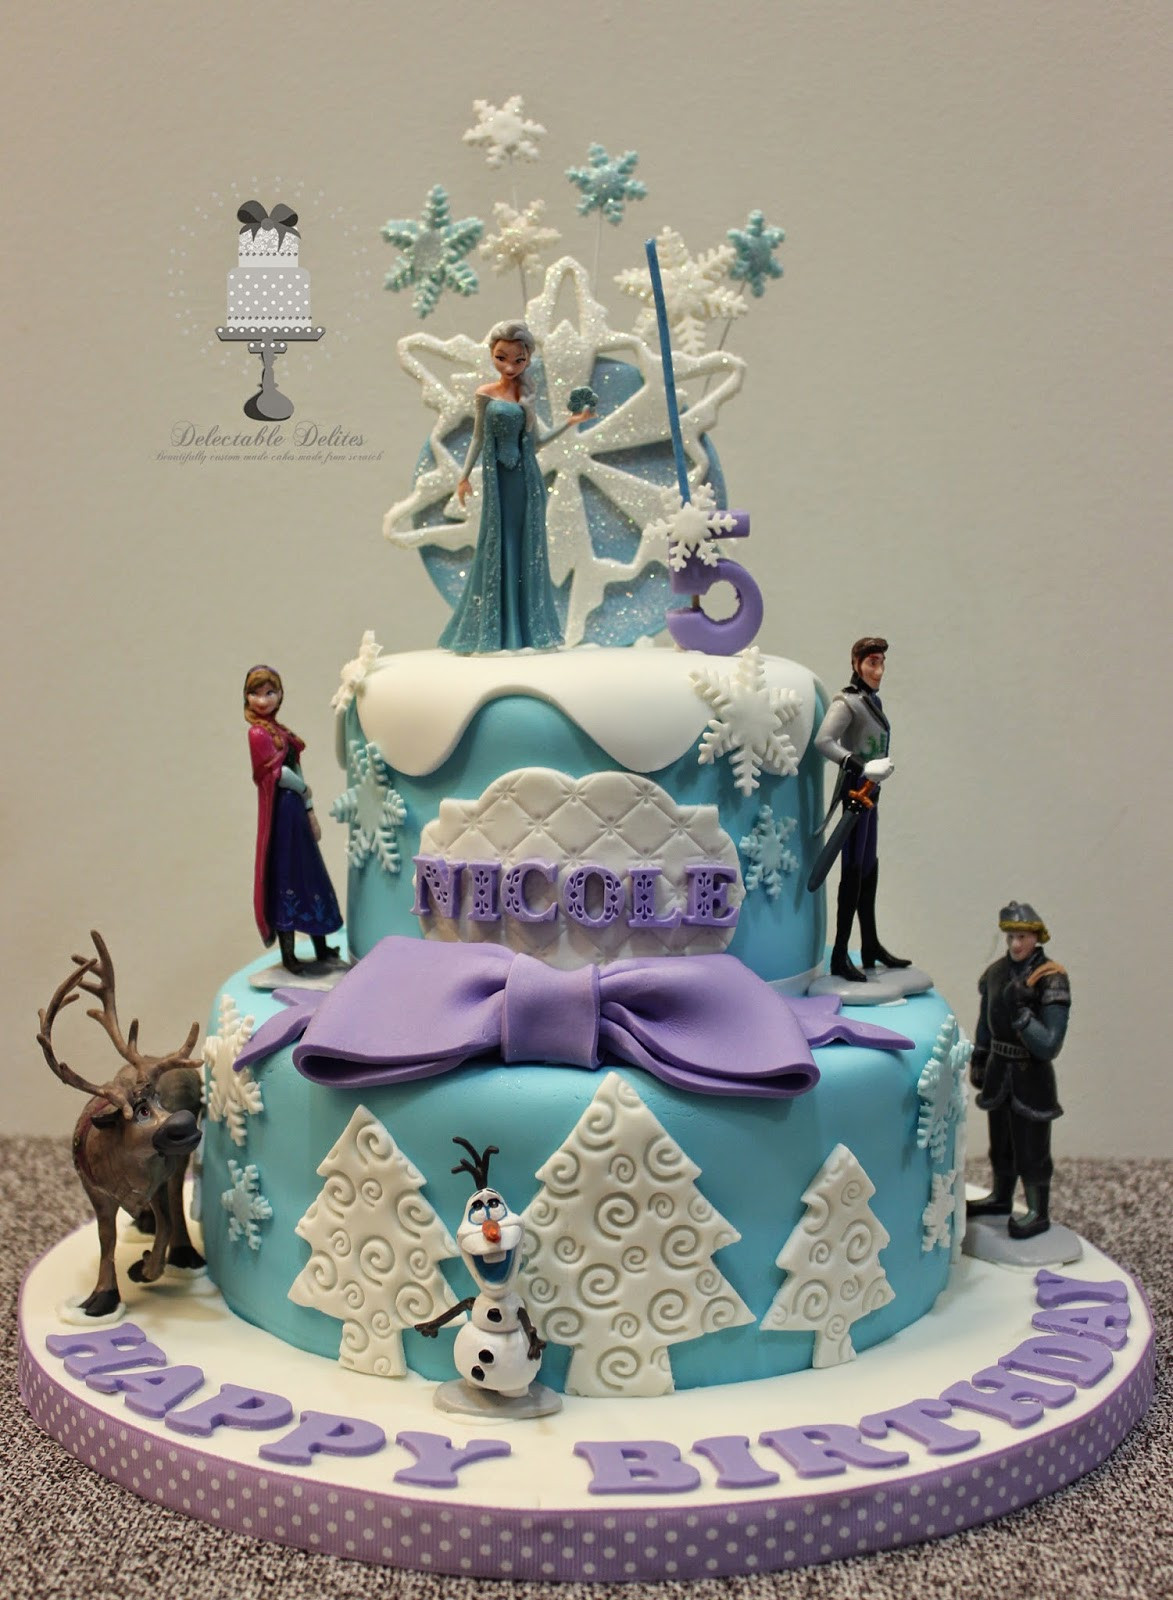 Frozen Themed Birthday Cake
 Delectable Delites Frozen theme cake for Nicole s 5th